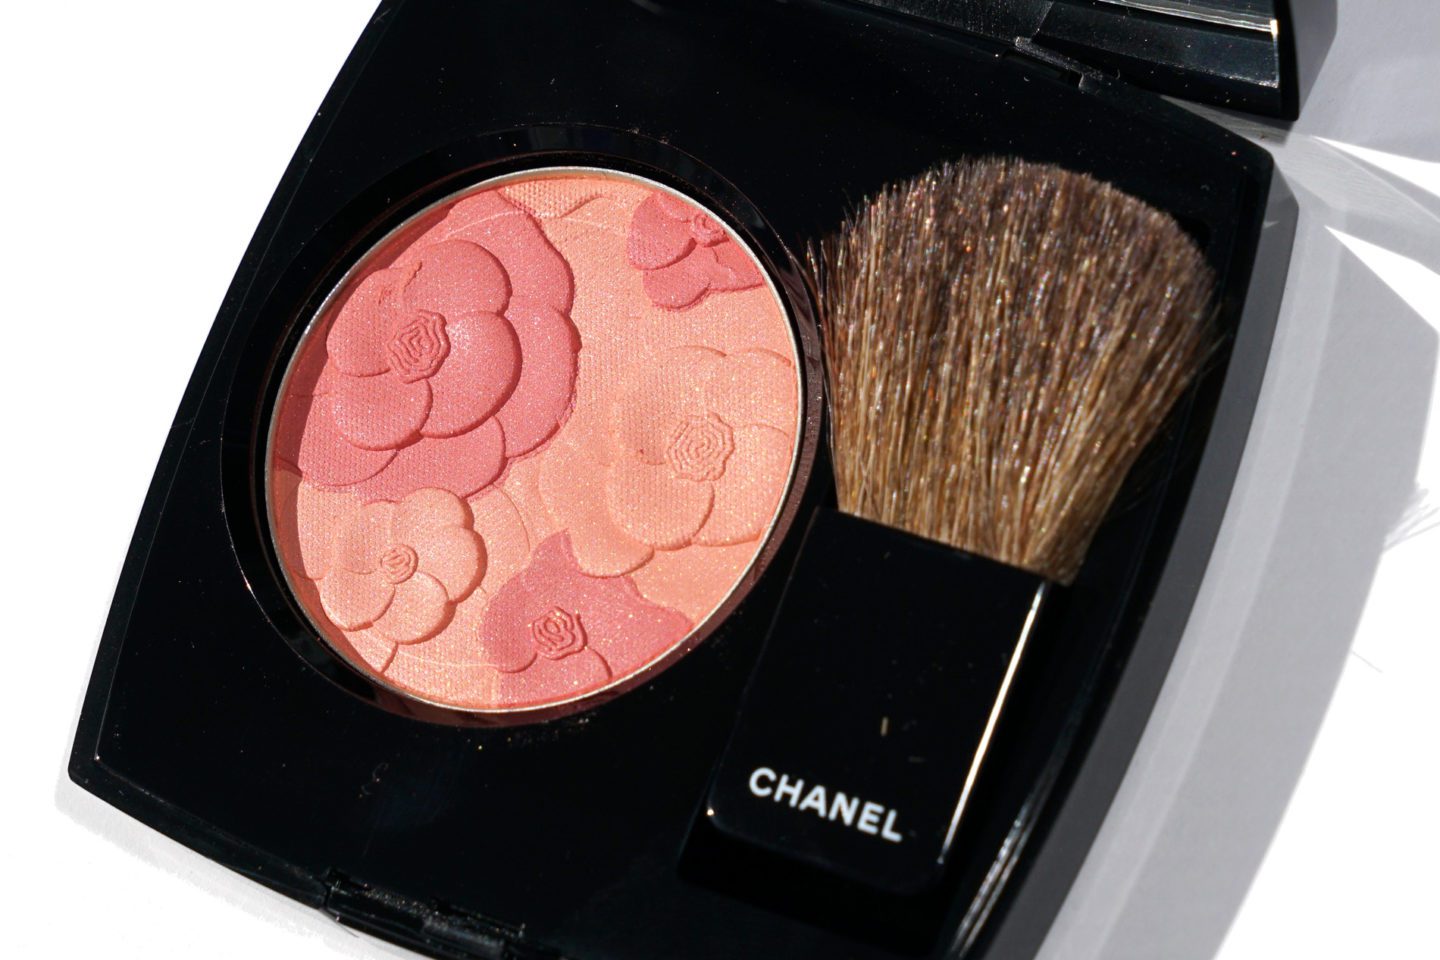 Chanel Jardin de Chanel Blush Camelia Peche Cyber Monday Launch | The Beauty Look Book